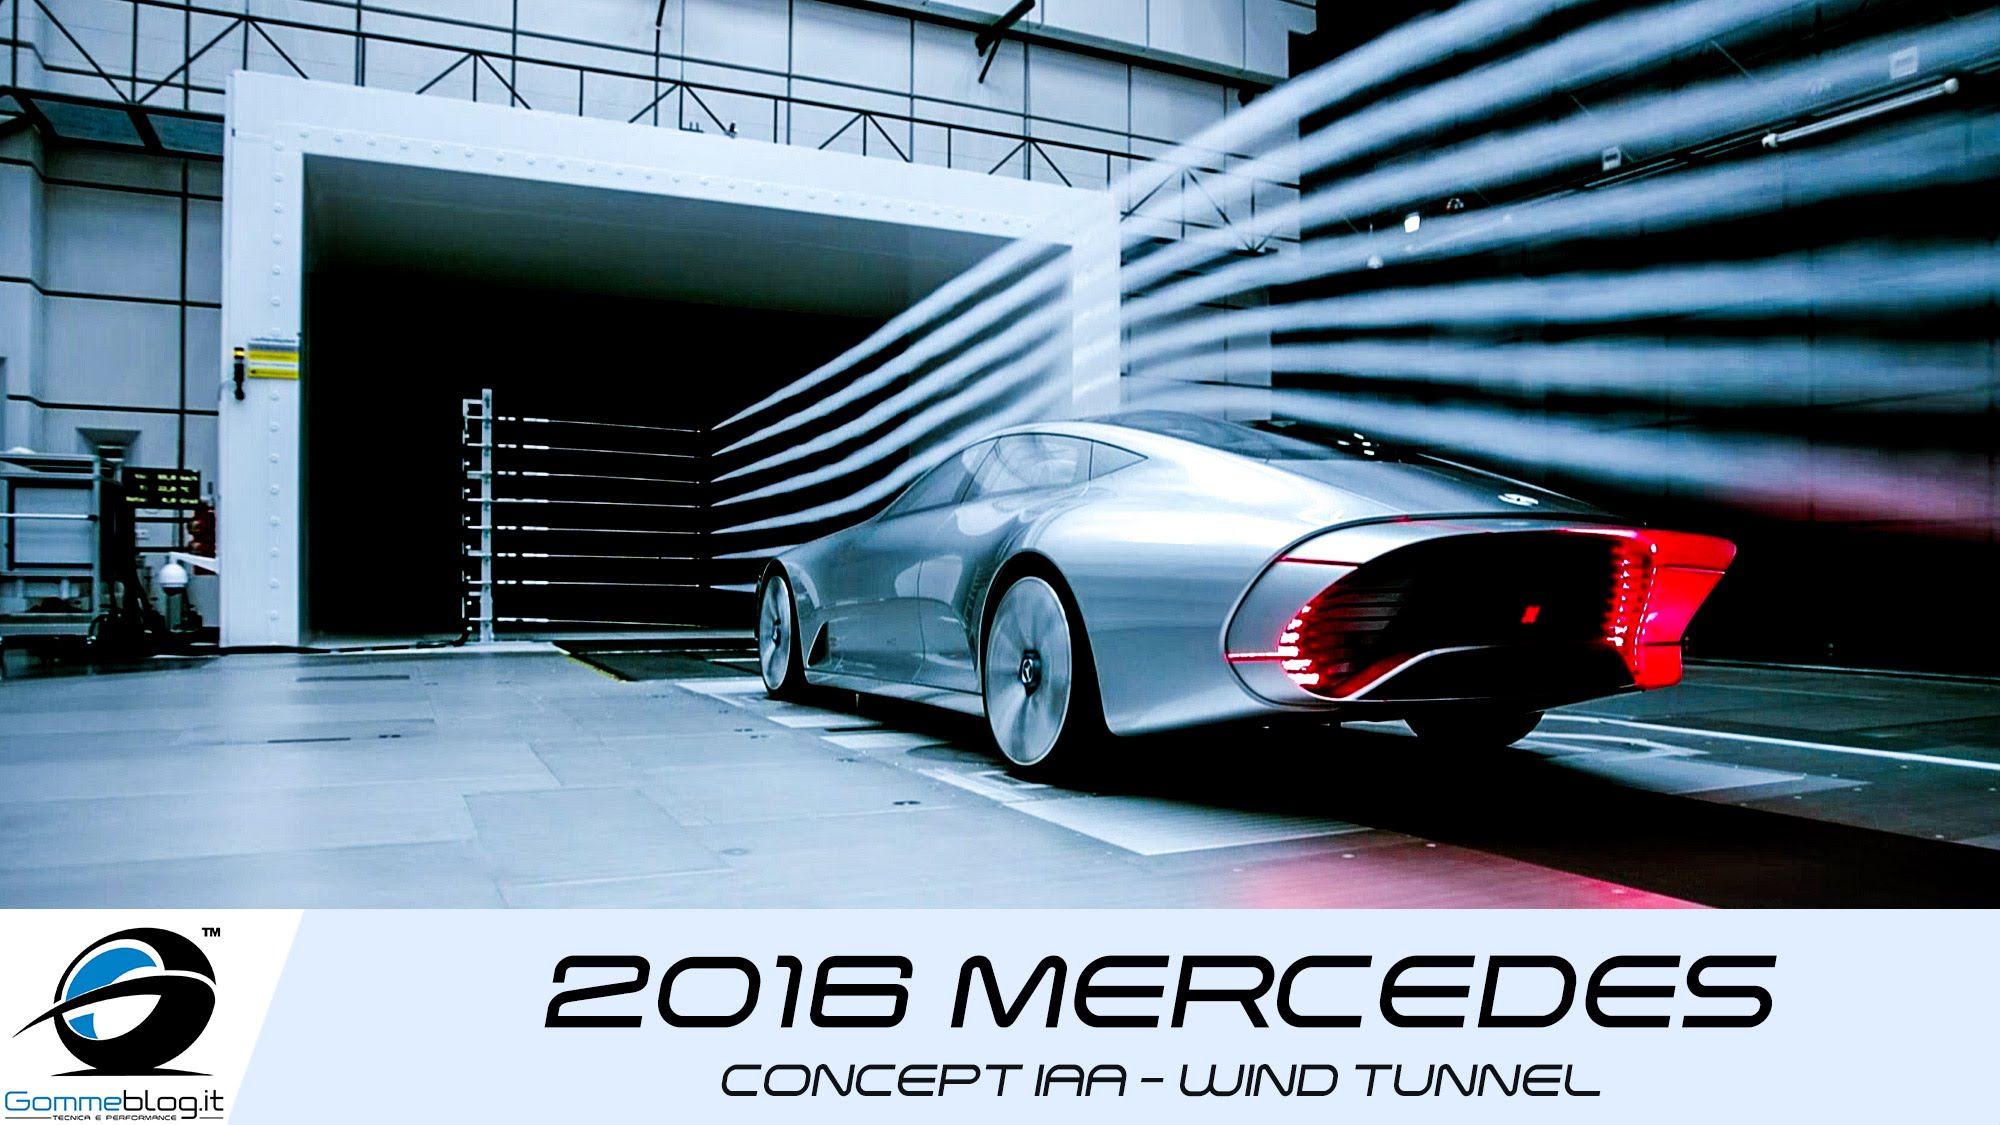 2016 Mercedes Benz Concept IAA | WIND TUNNEL - YouTube